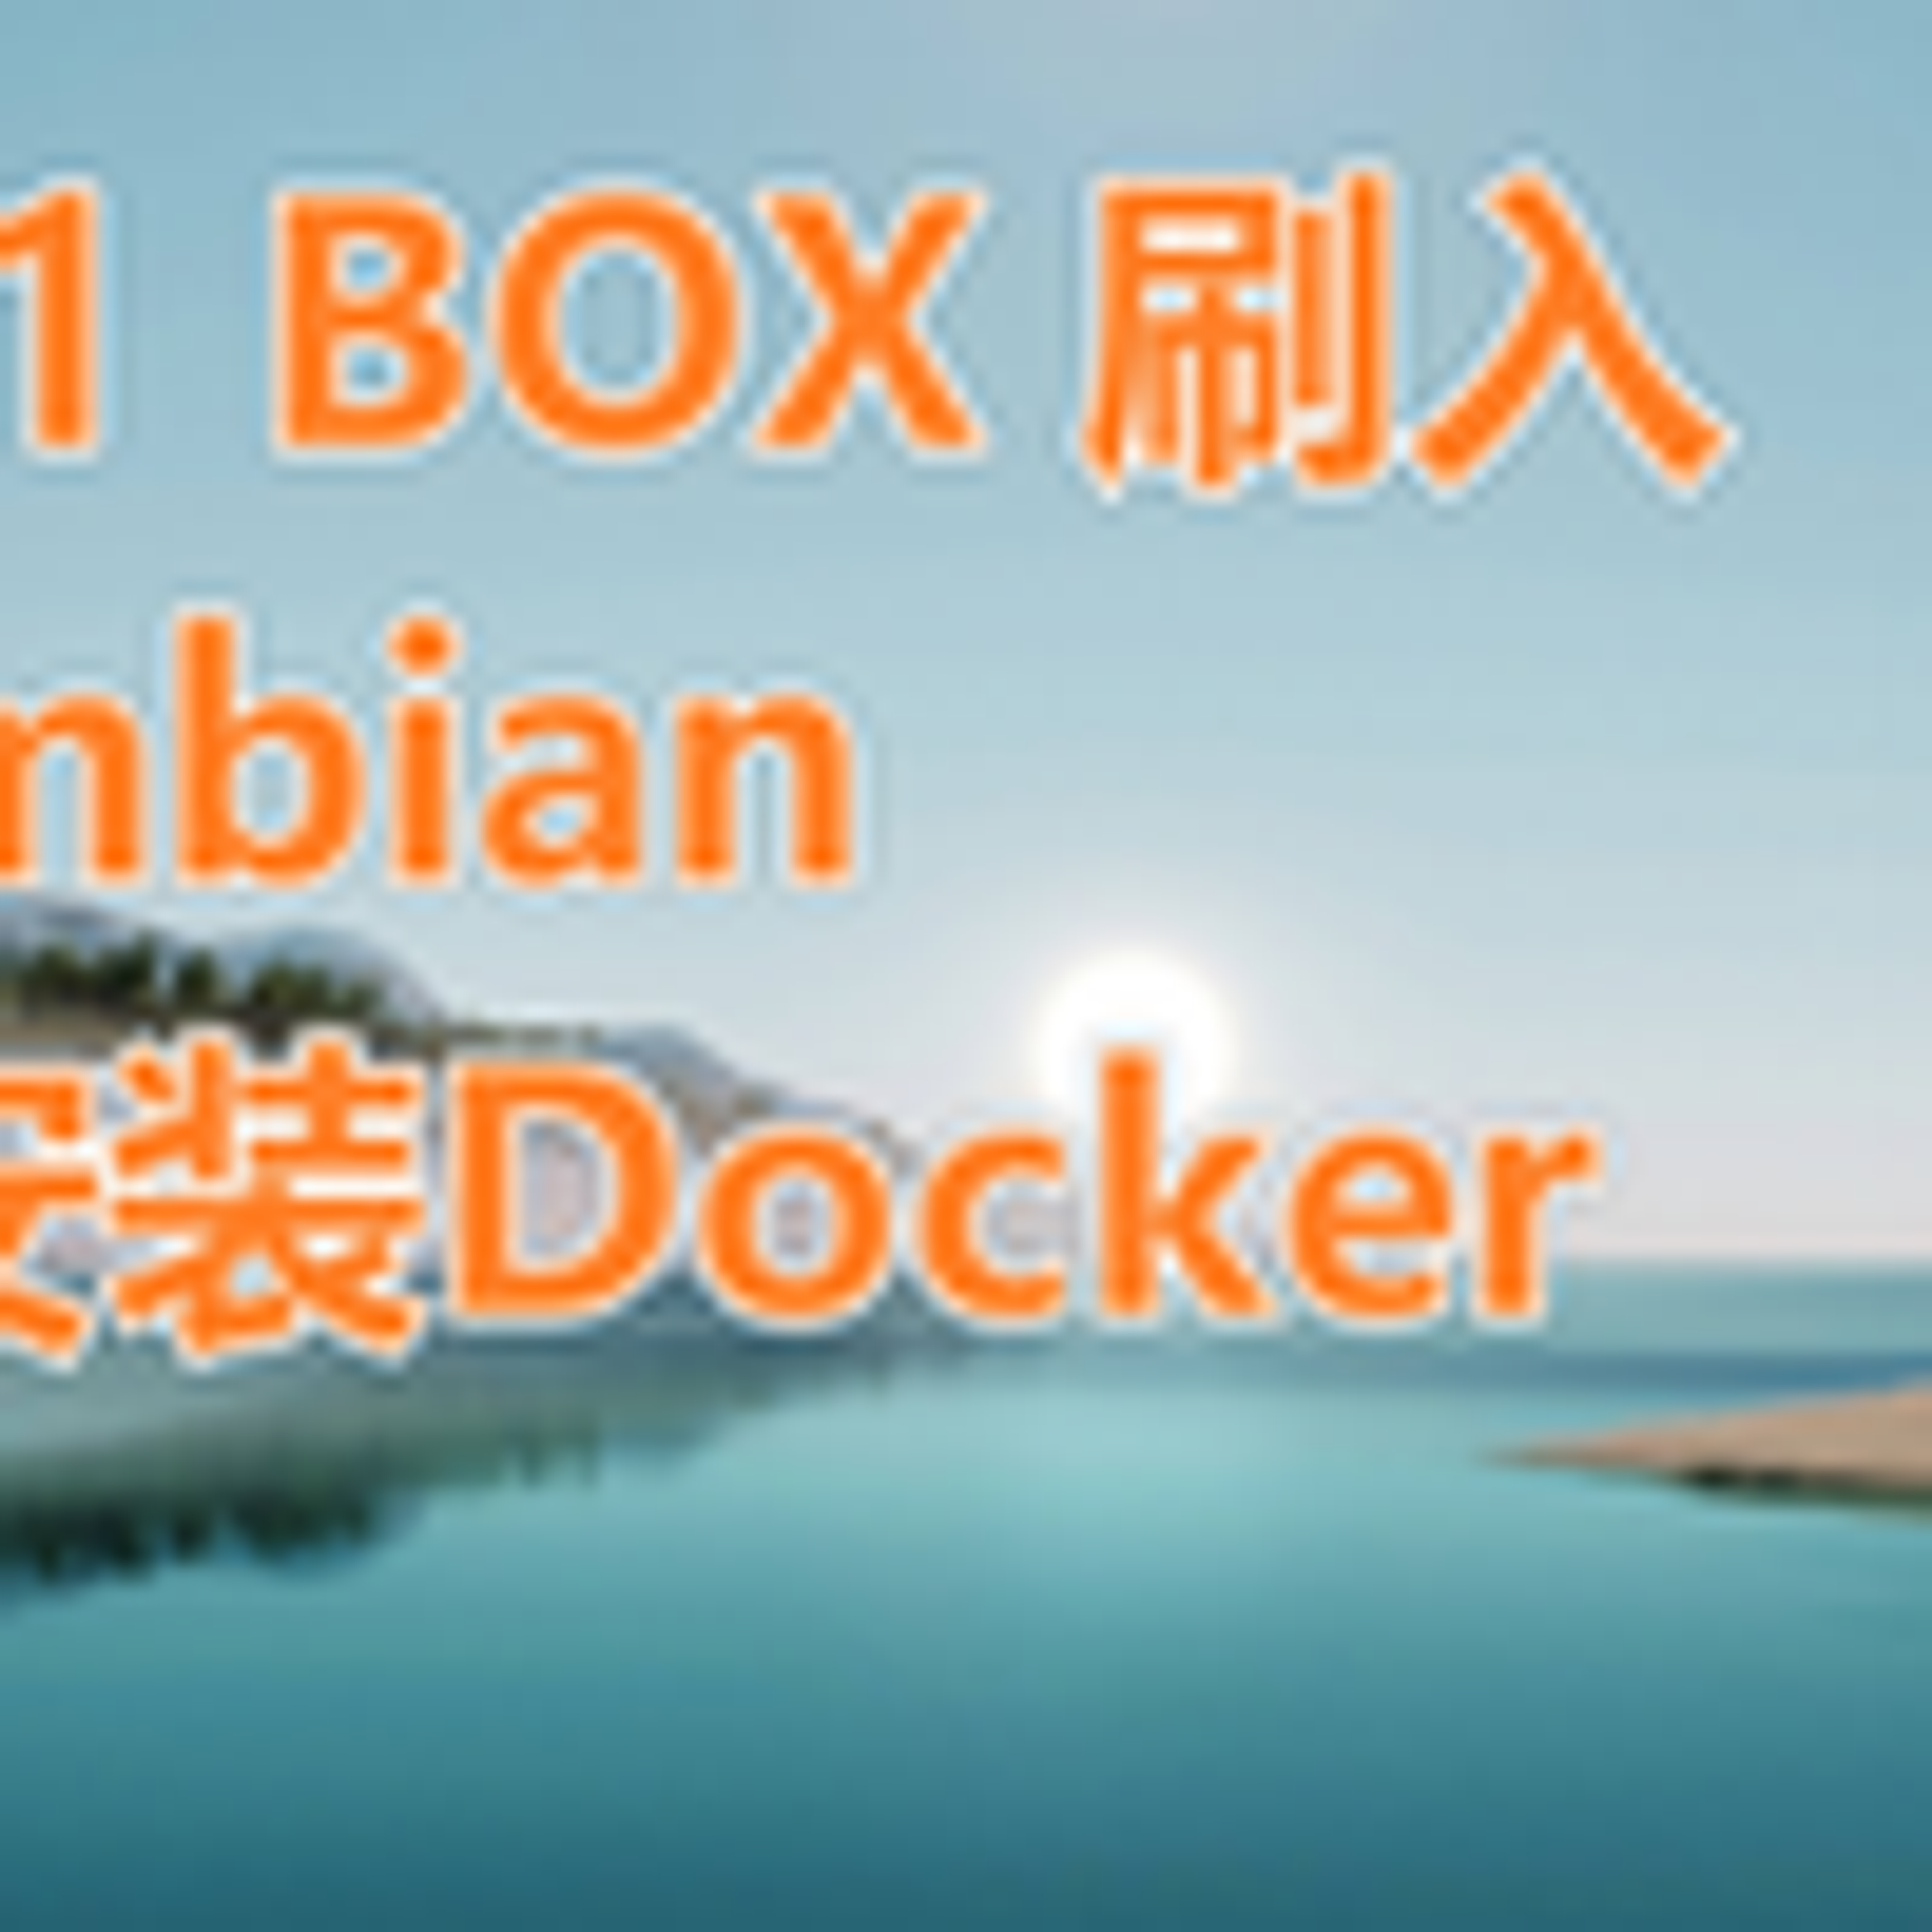 HK1 box 刷入Armbian 并安装Docker 刷armbian 电视盒子刷armbian_哔哩哔哩_bilibili